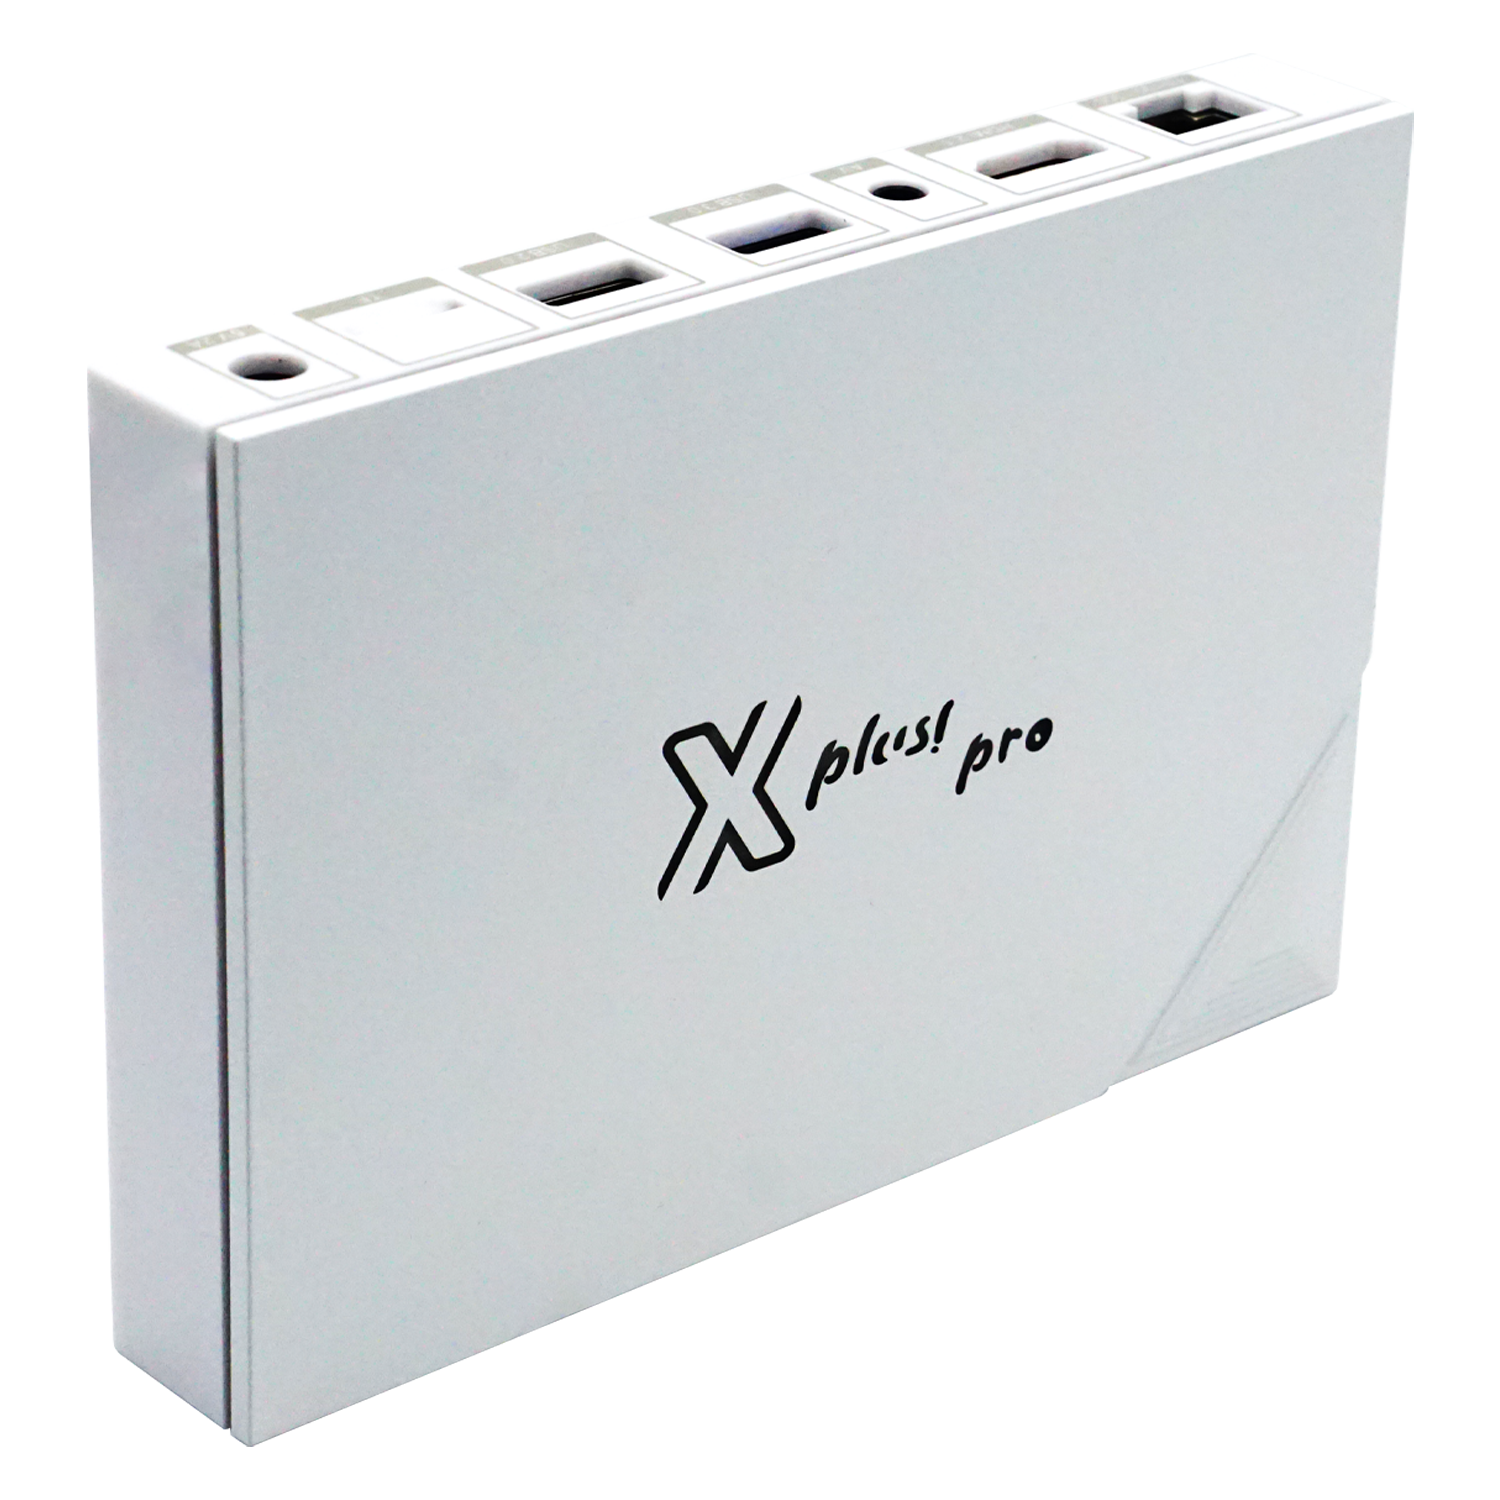 Receptor Interbras Xplus Pro 8K 4GB RAM / 64GB / Wifi-5G / USB-3.0 / Android 11.0